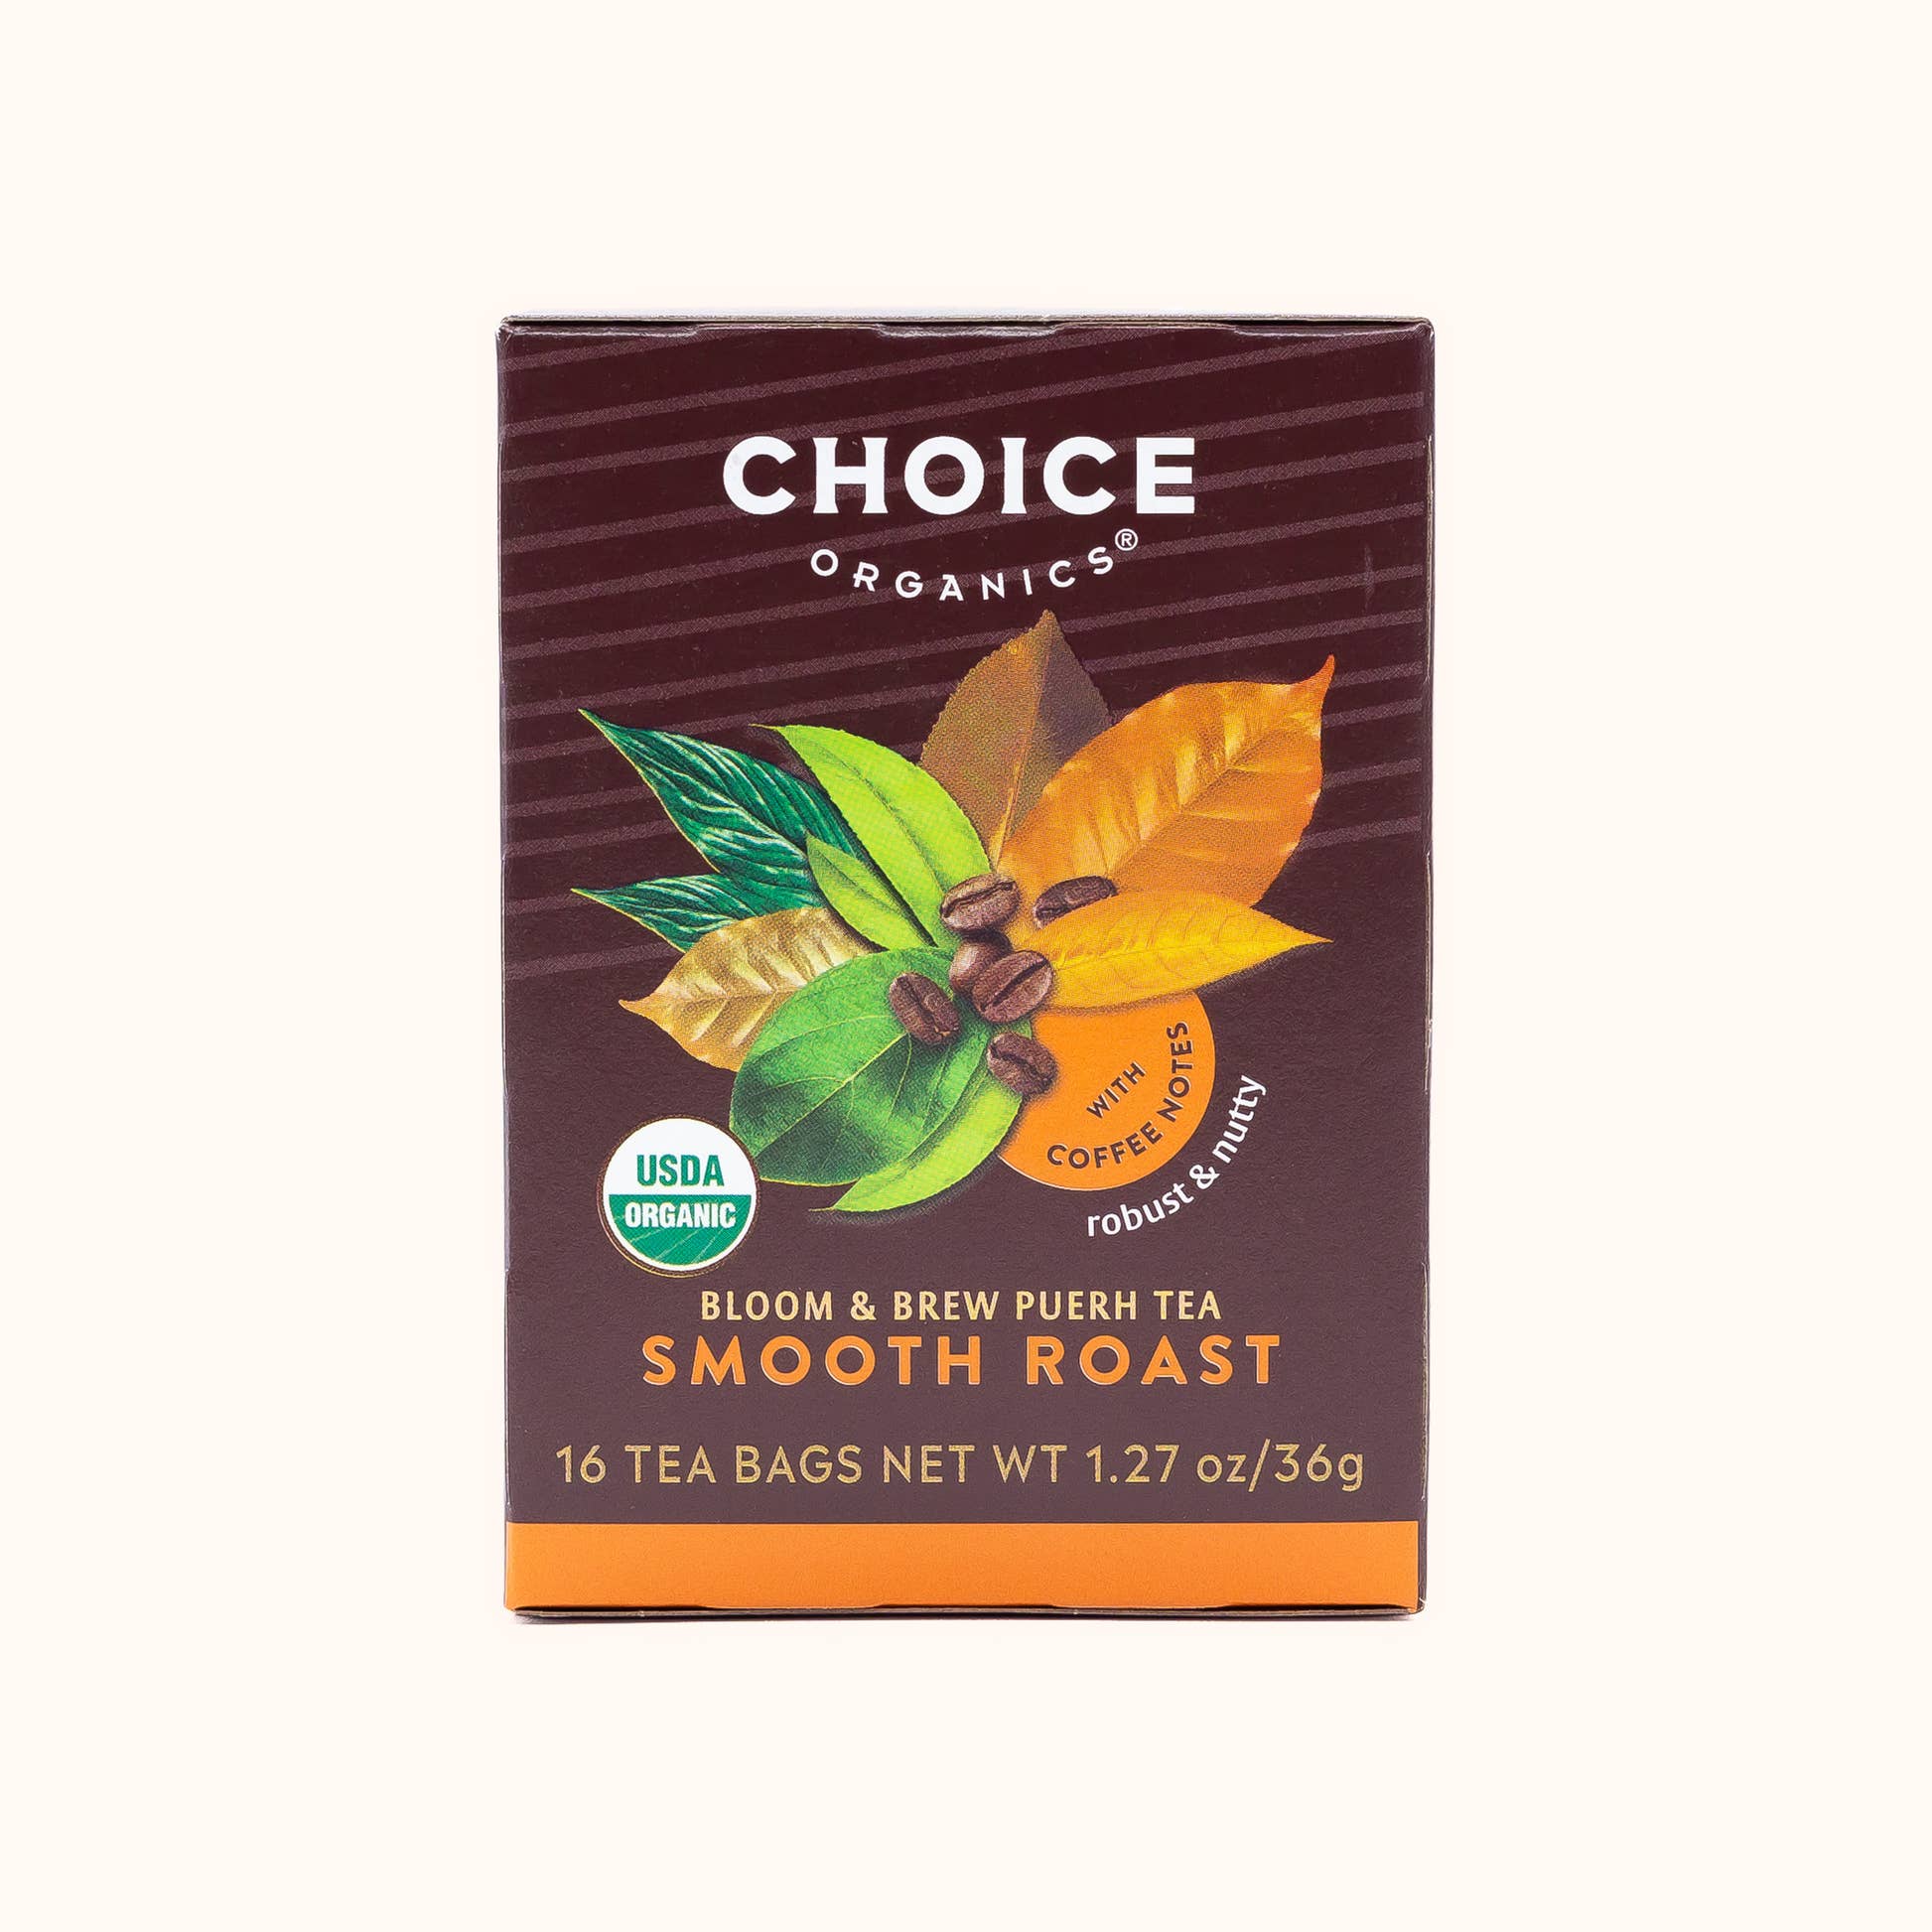 Organic Smooth Roast Tea box